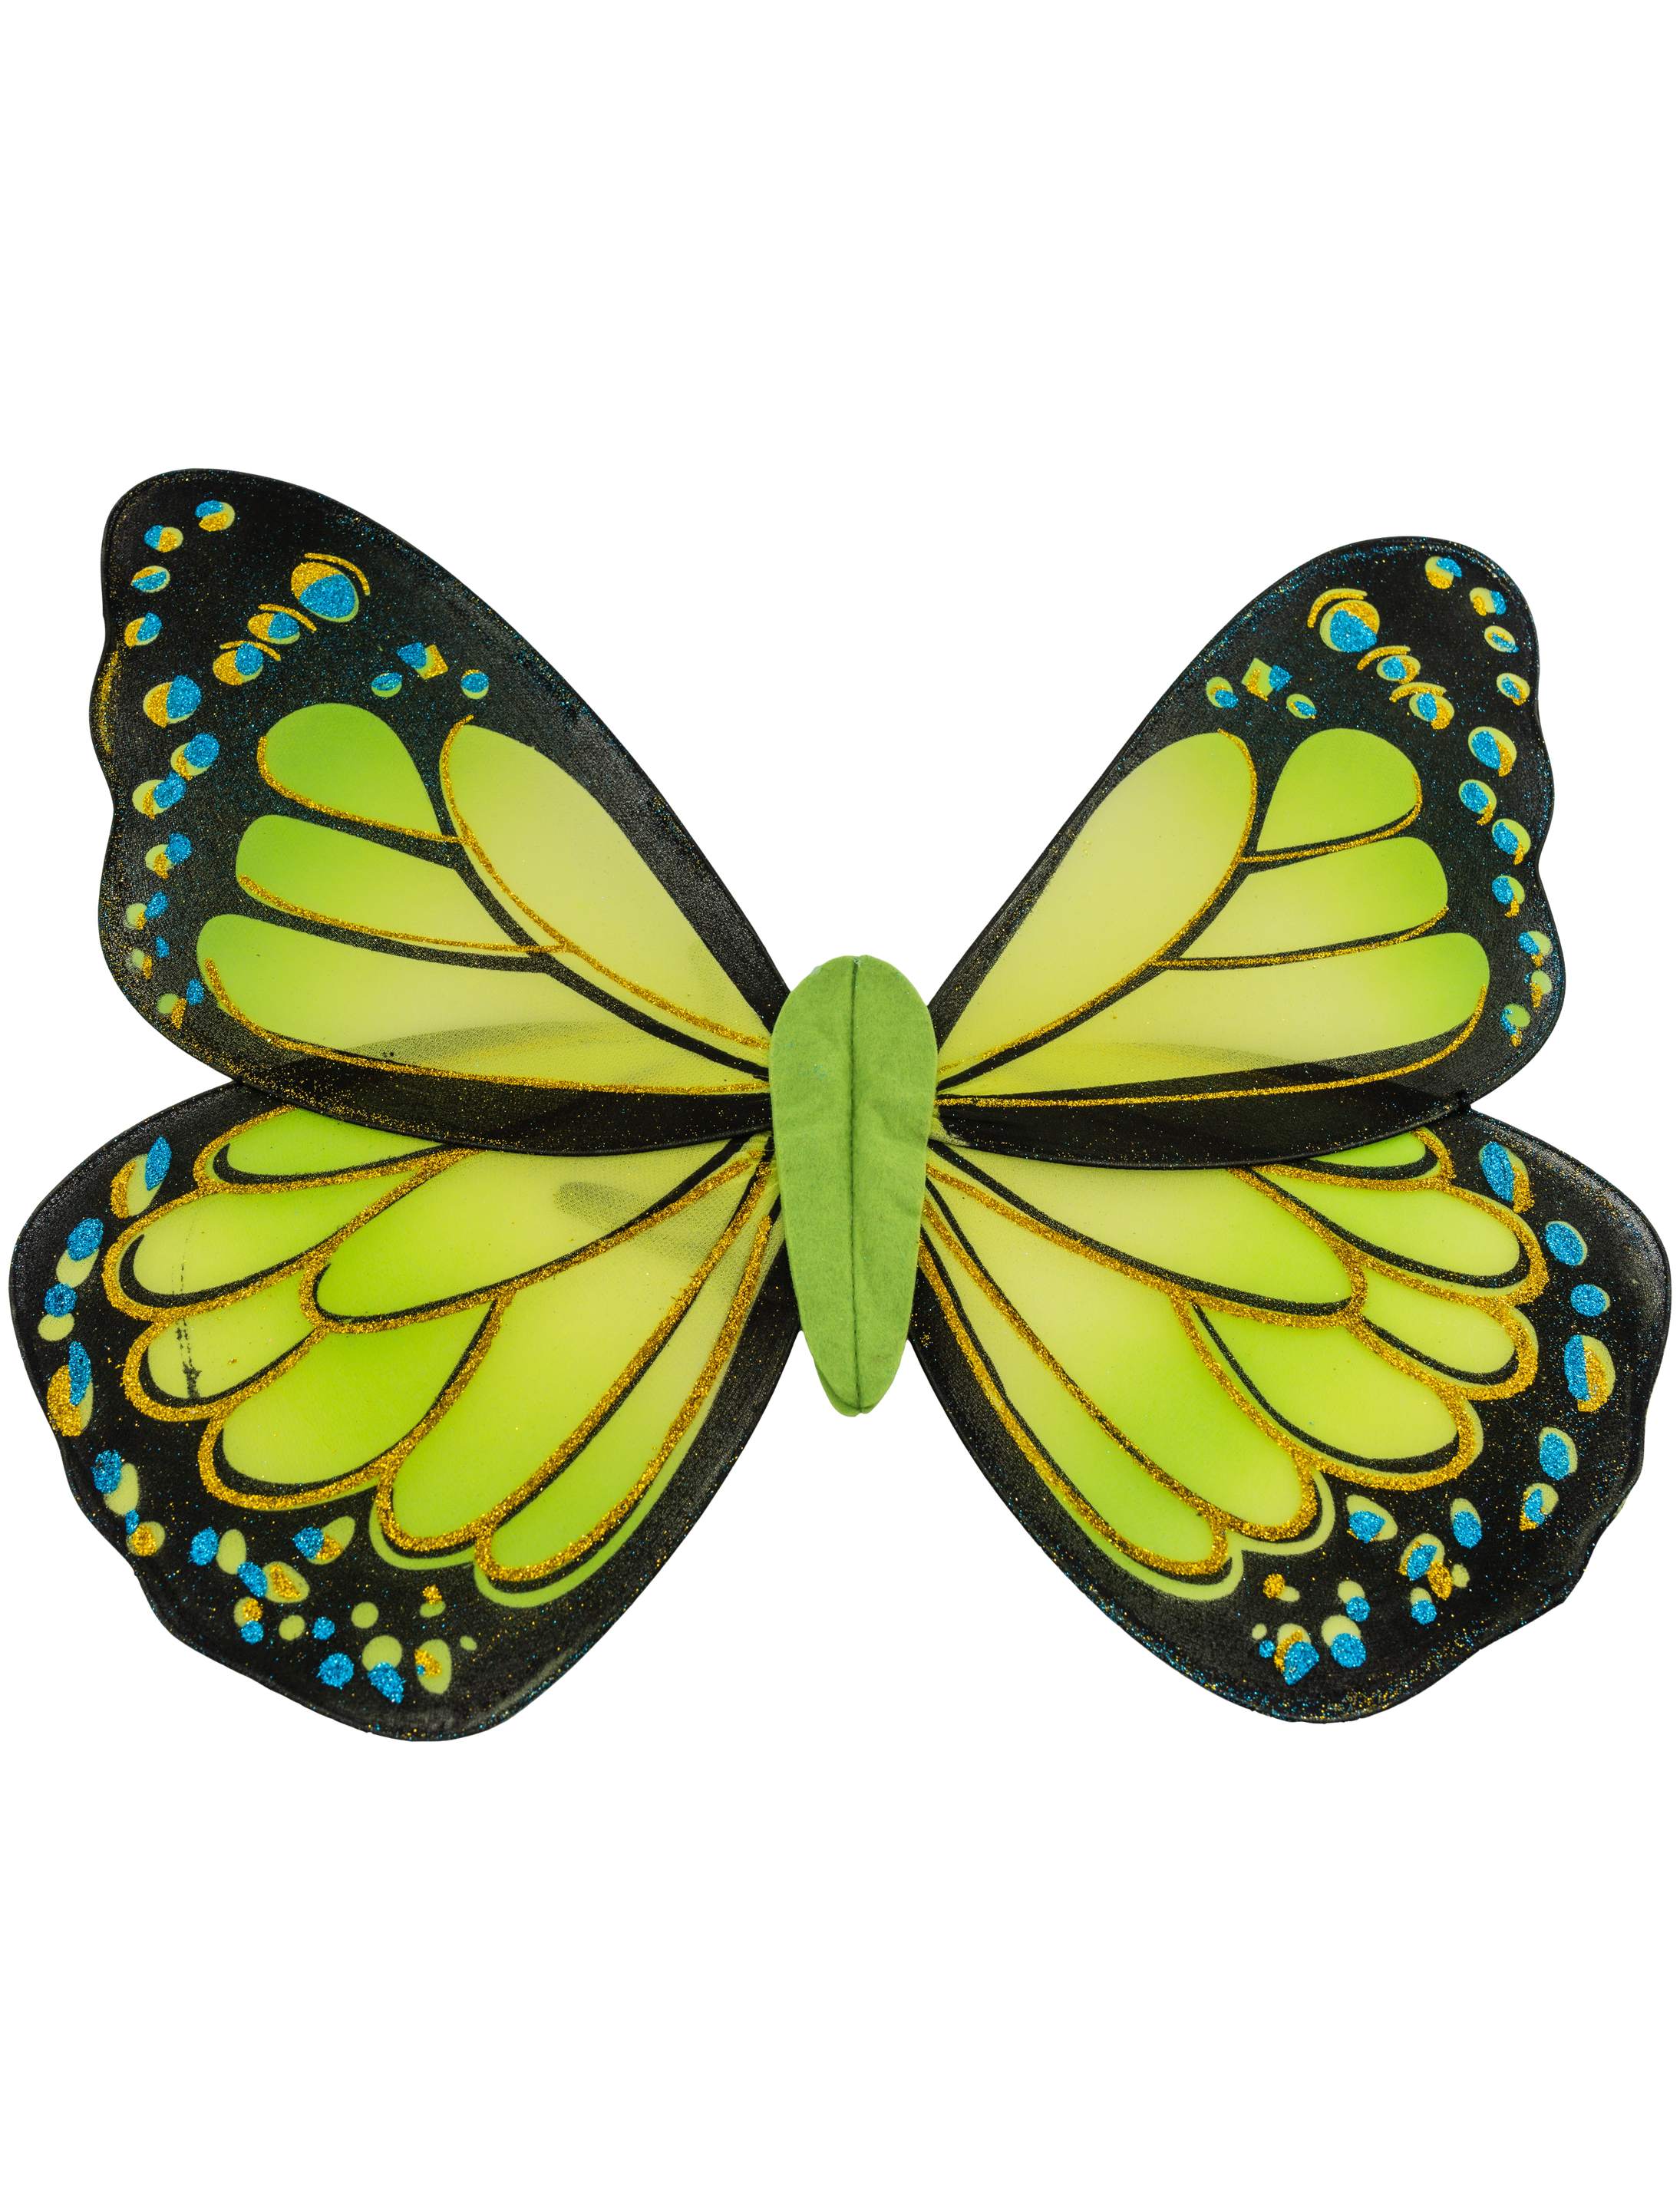 Schmetterlingsflügel grün/schwarz 59 x 51 cm